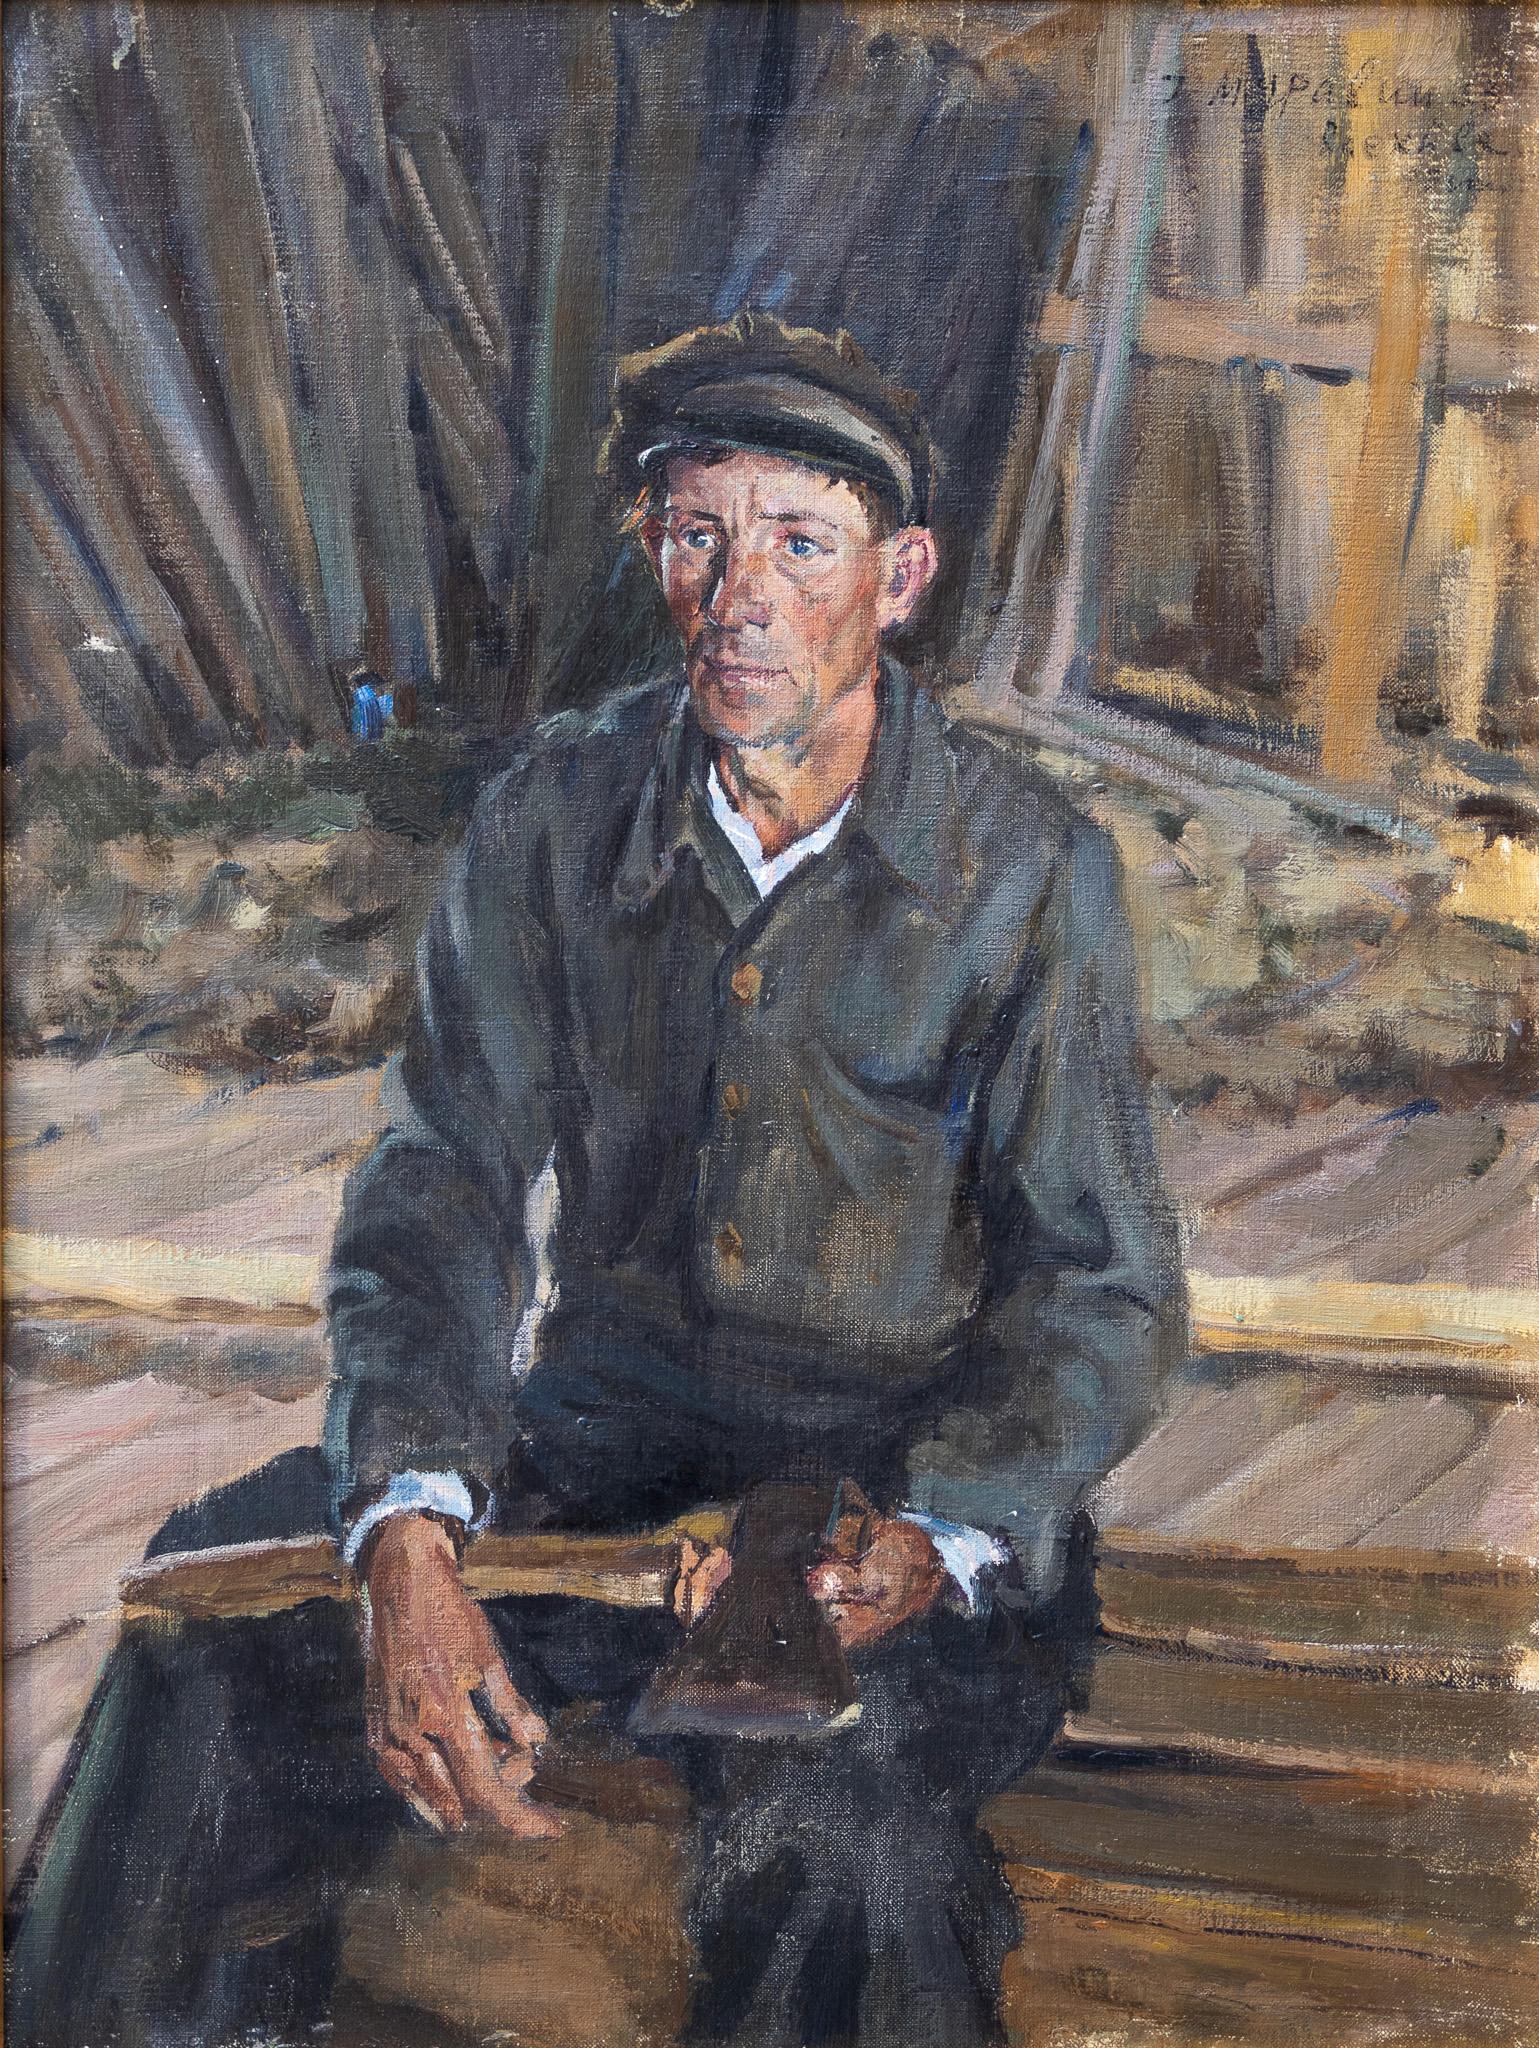 Nikolai Sergeyev Portrait Painting - "Carpenter" Russian Realist Portrait